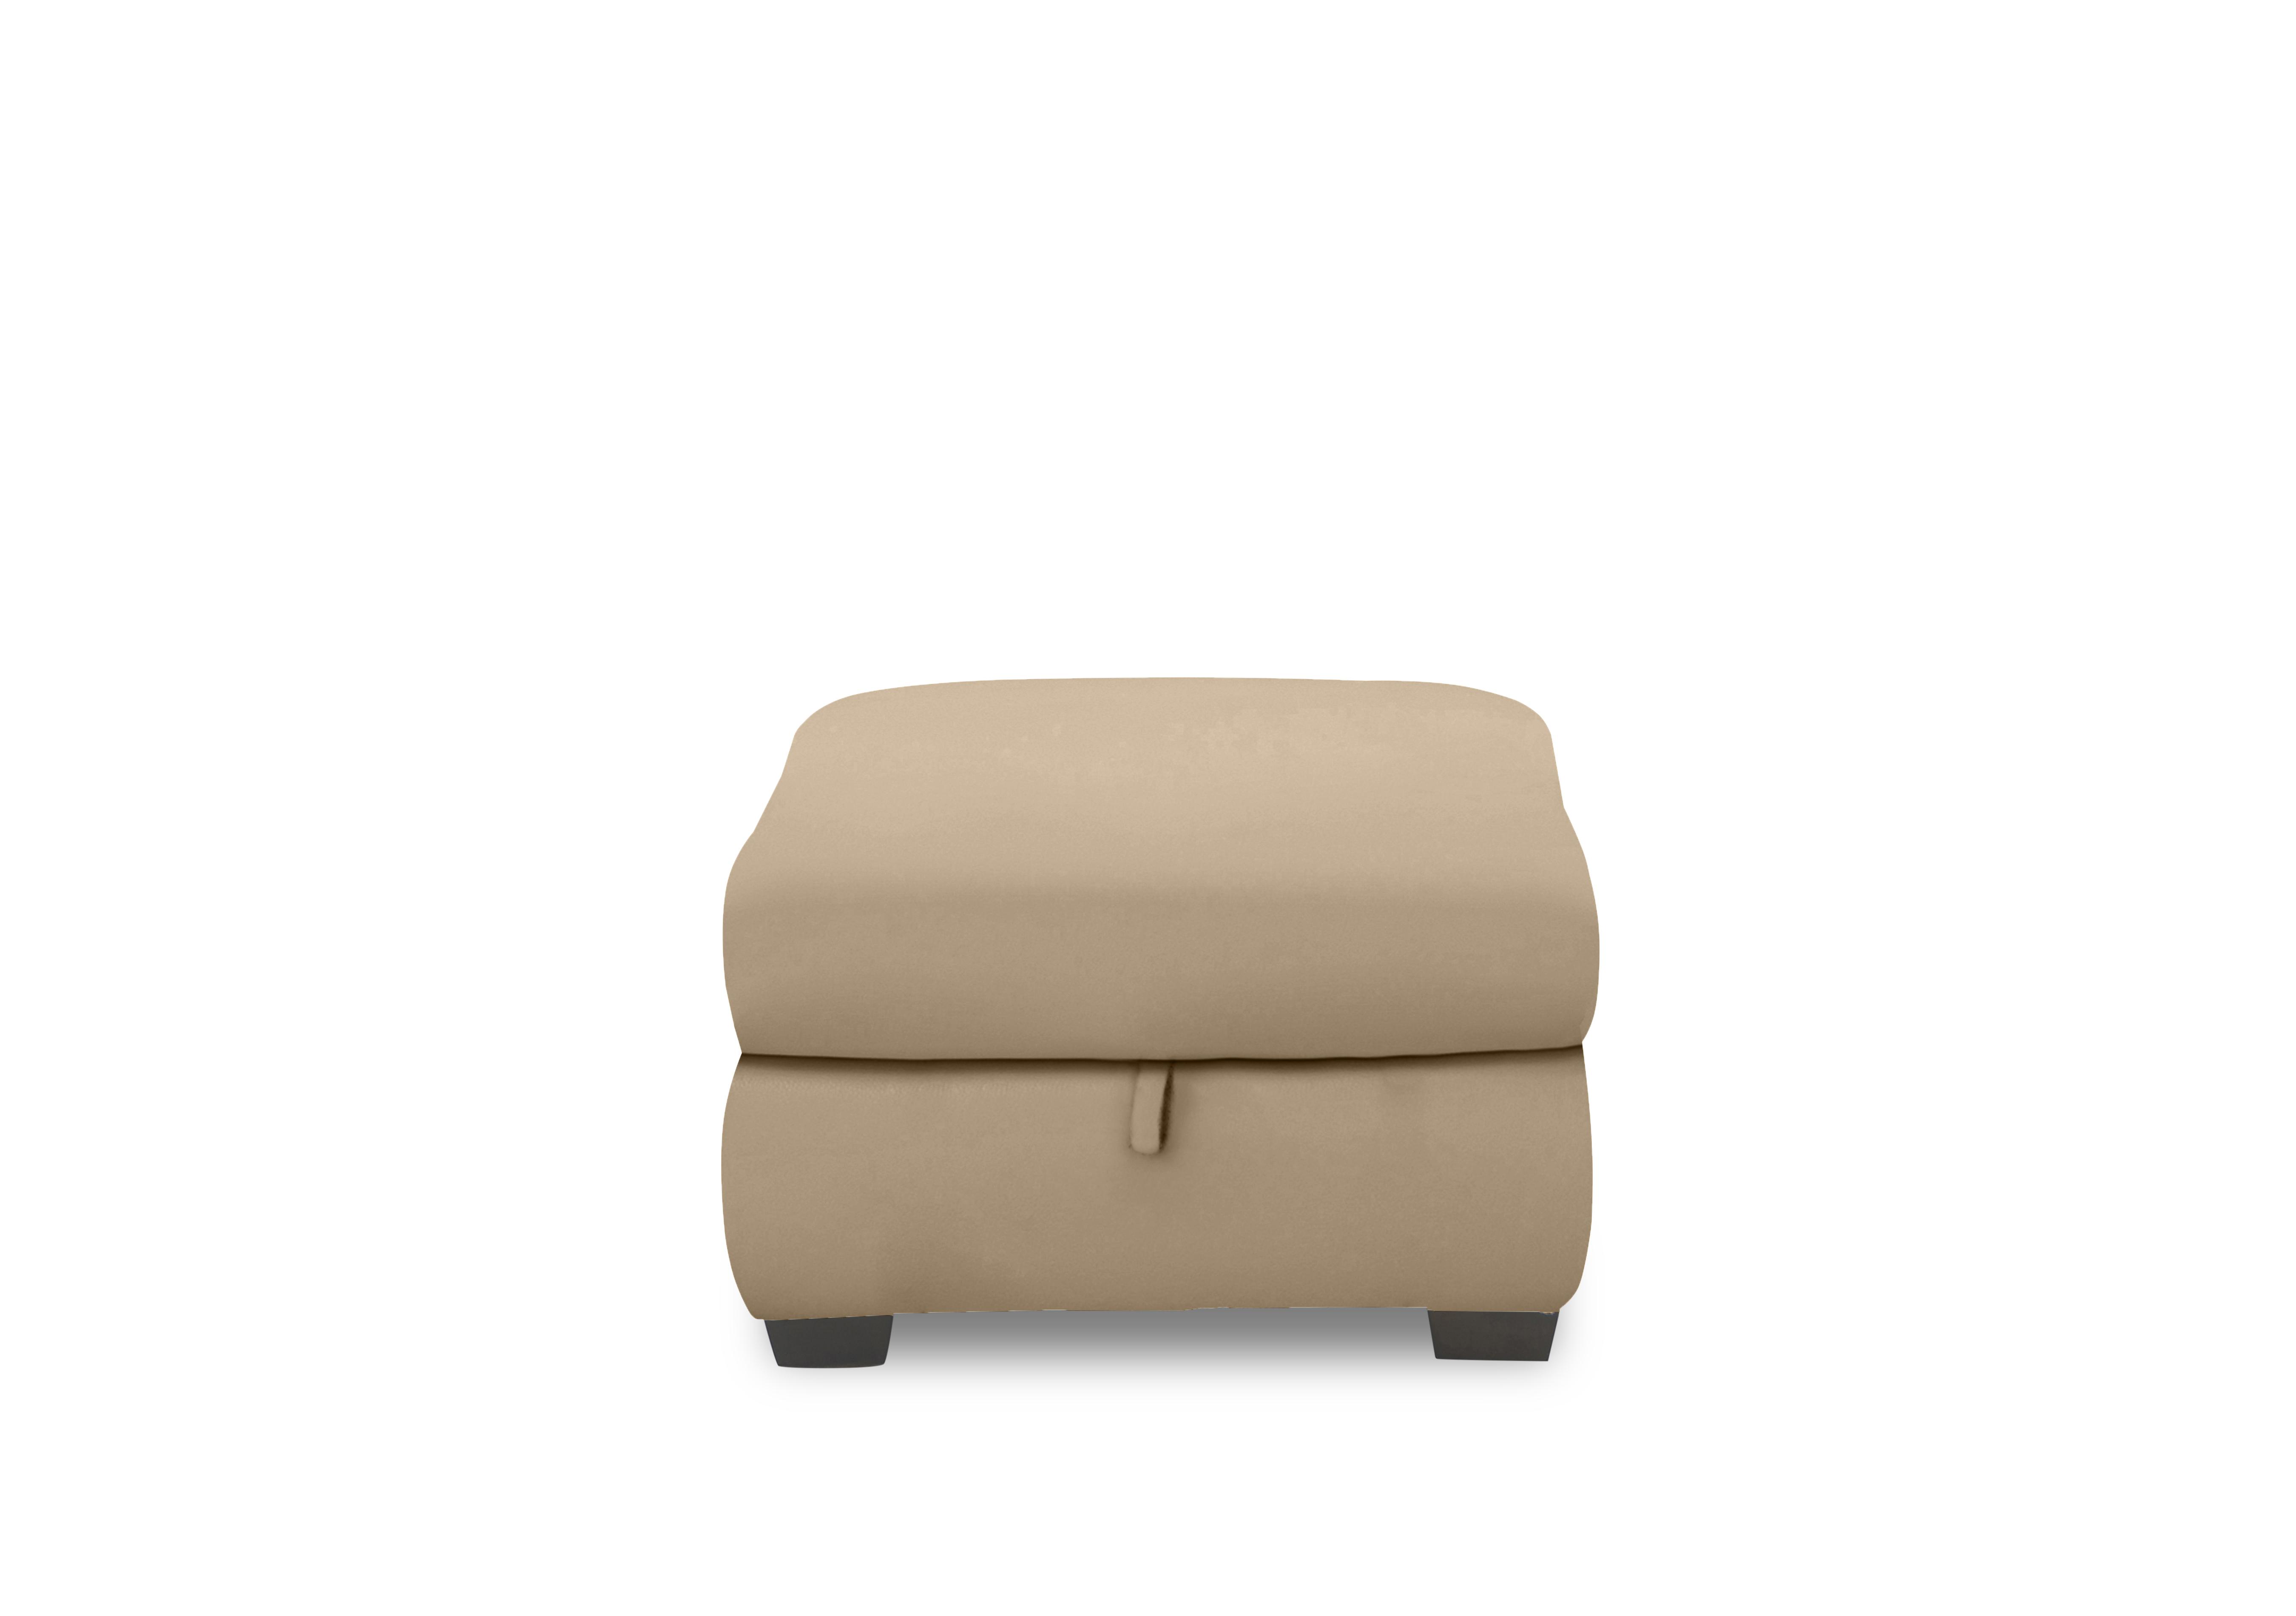 Nixon Leather Storage Footstool in Nw-8475 Nude on Furniture Village